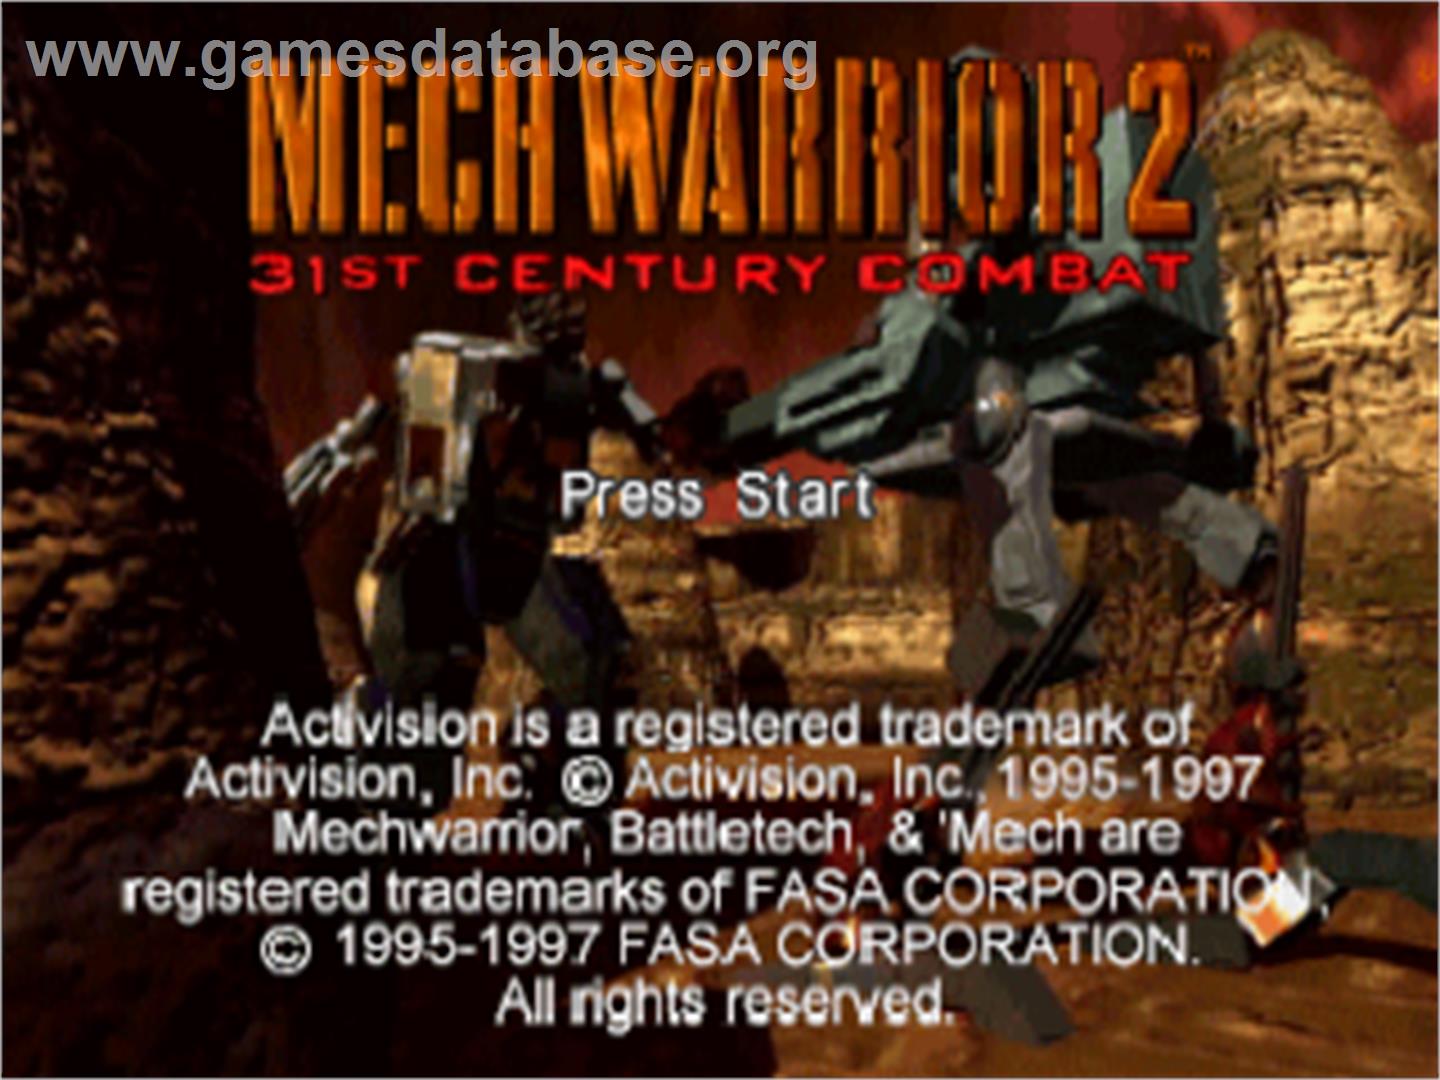 MechWarrior 2: 31st Century Combat - Sega Saturn - Artwork - Title Screen